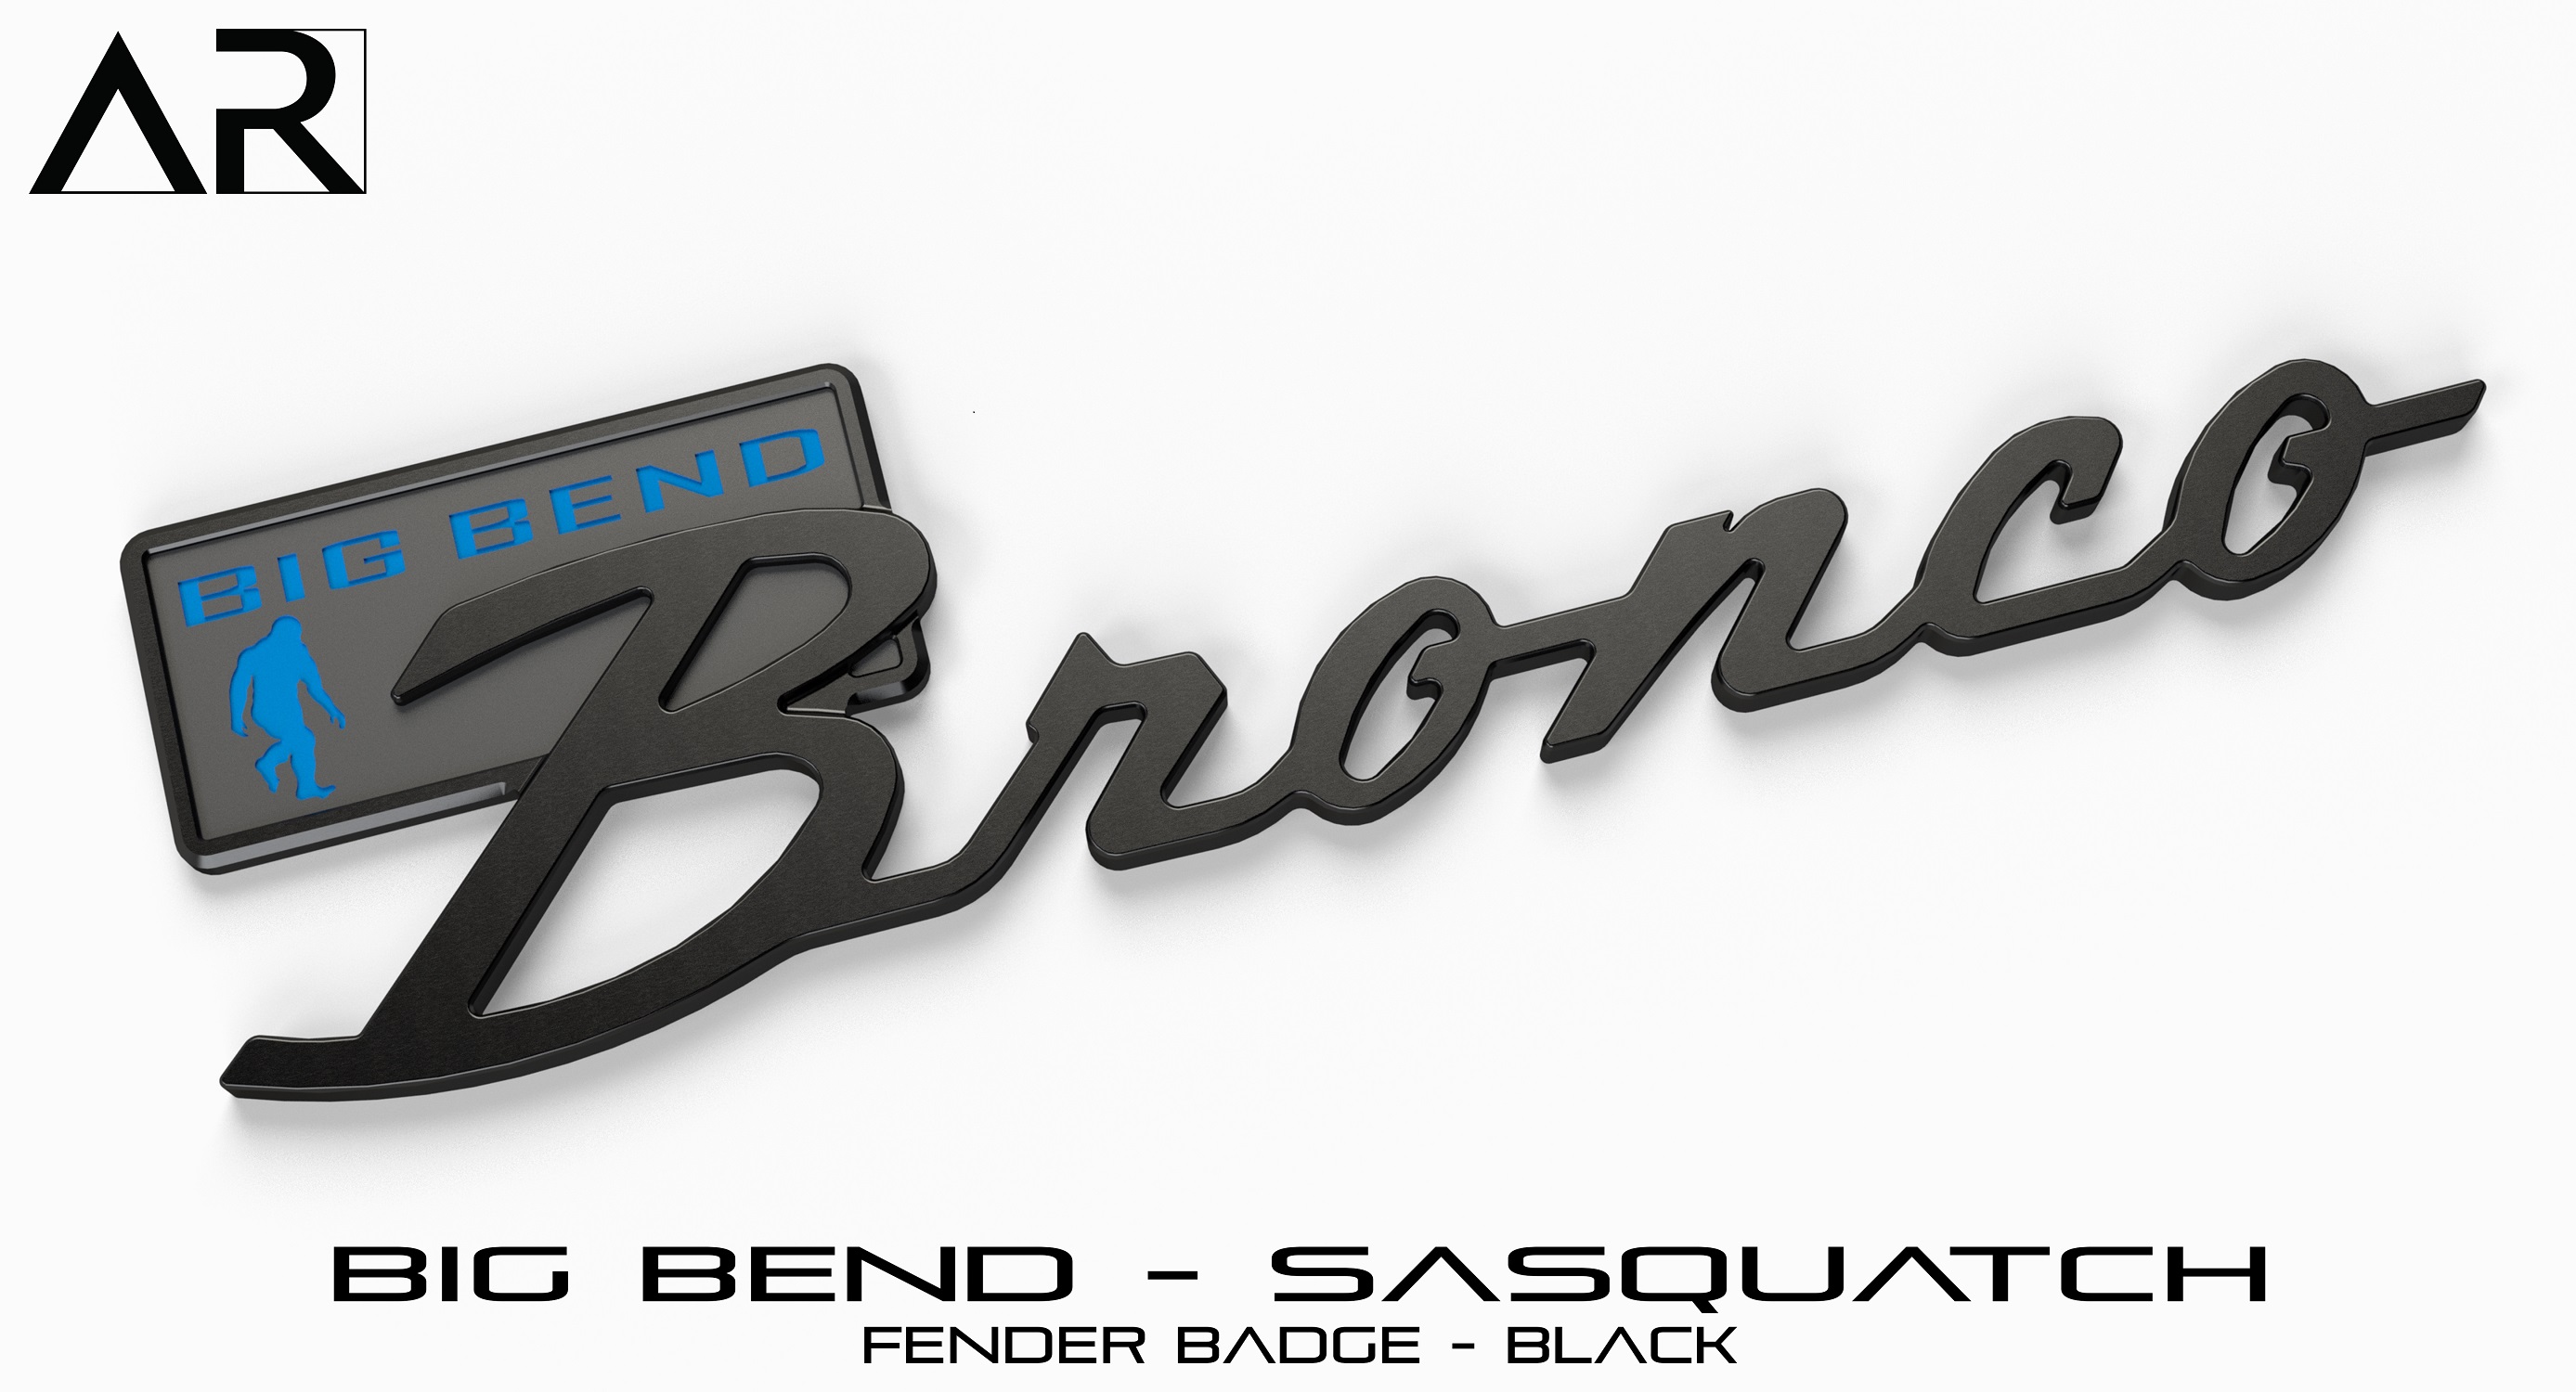 Ford Bronco AR | BRONCO CLASSIC DNA Fender Badge 1601007_S  - Fender Badge  - Big Bend Sasquatch - Black